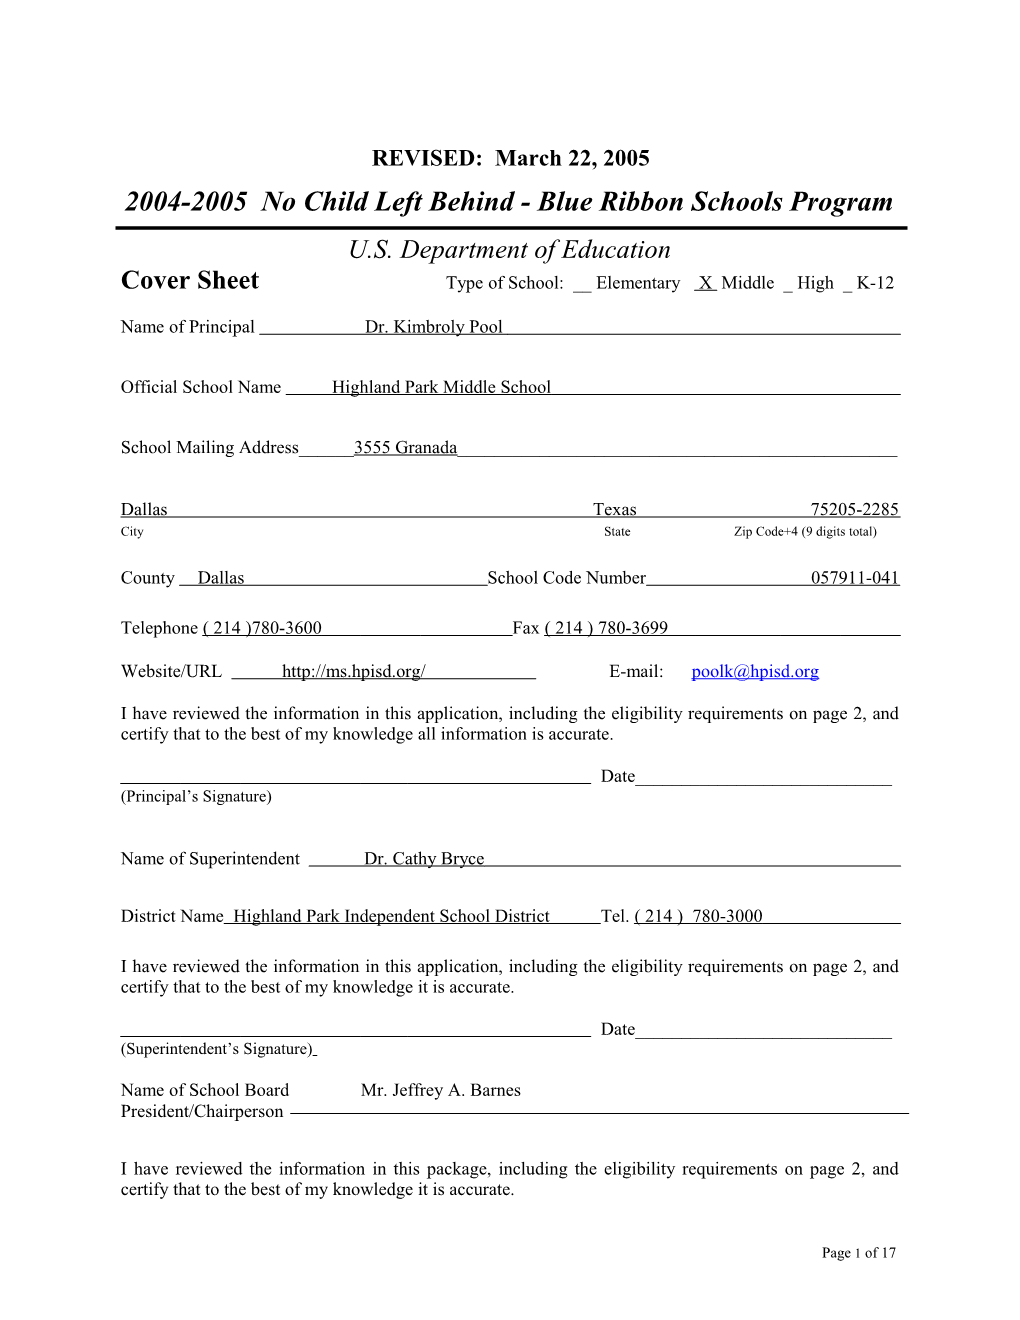 Highland Park Middle School Application: 2004-2005, No Child Left Behind - Blue Ribbon